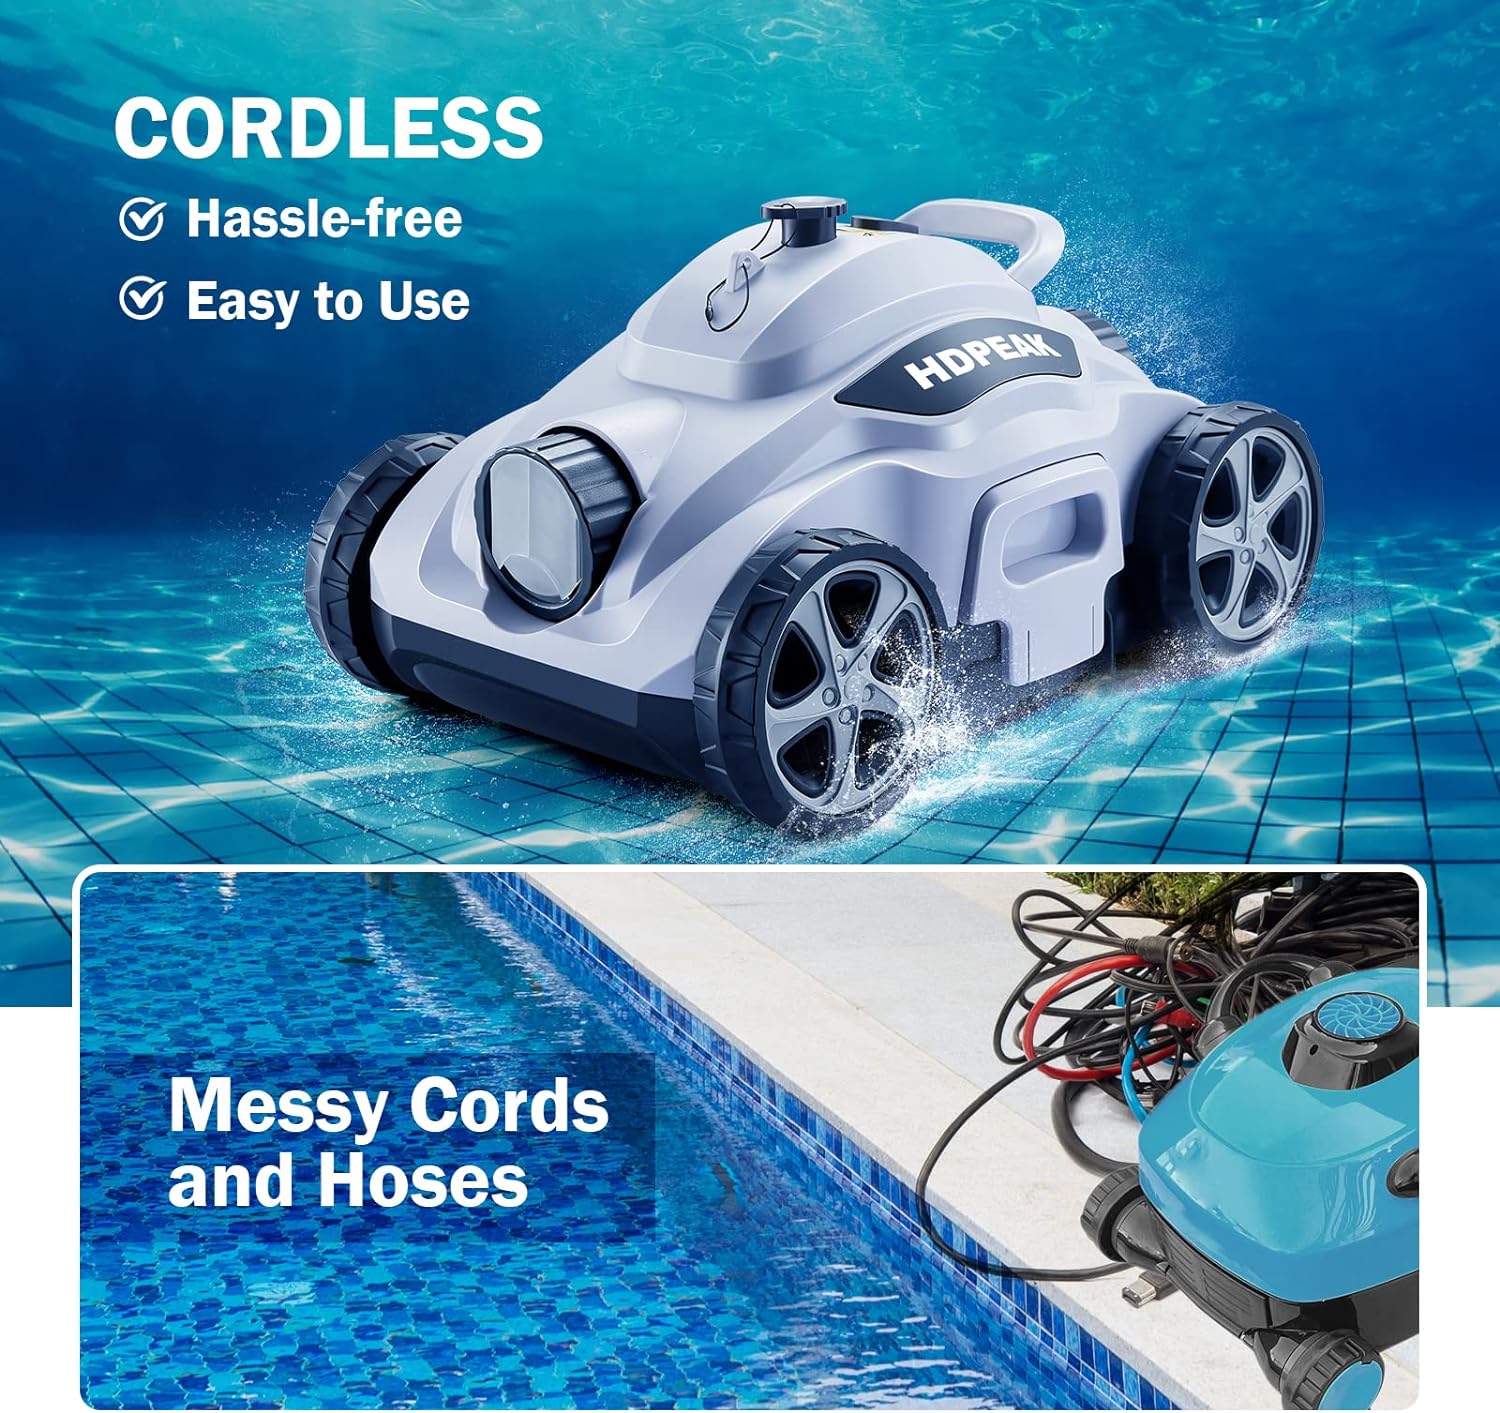 Perspective: Cordless Robotic Pool Cleaner, HDPEAK Pool Vacuum